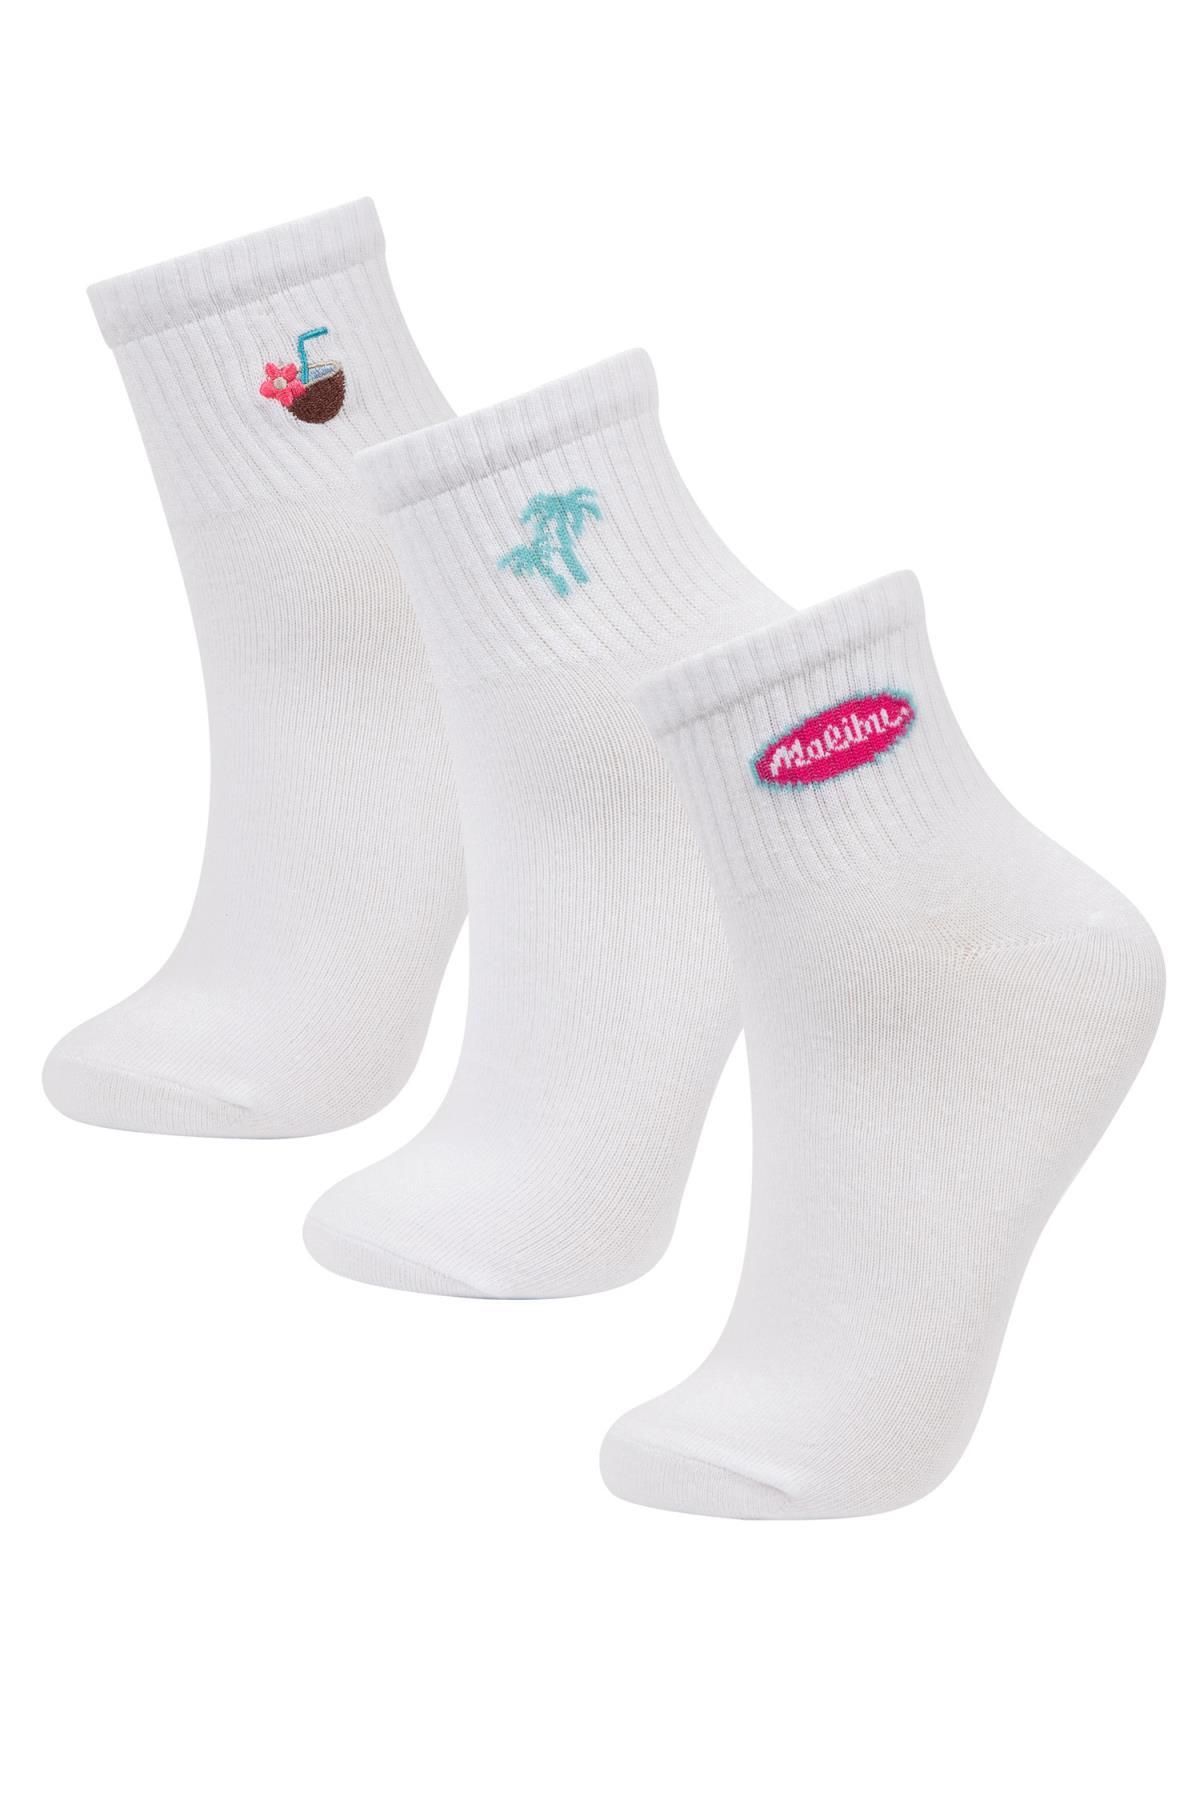 Defacto Kadın Nakış 3'lü Pamuklu Soket Çorap B6097axns